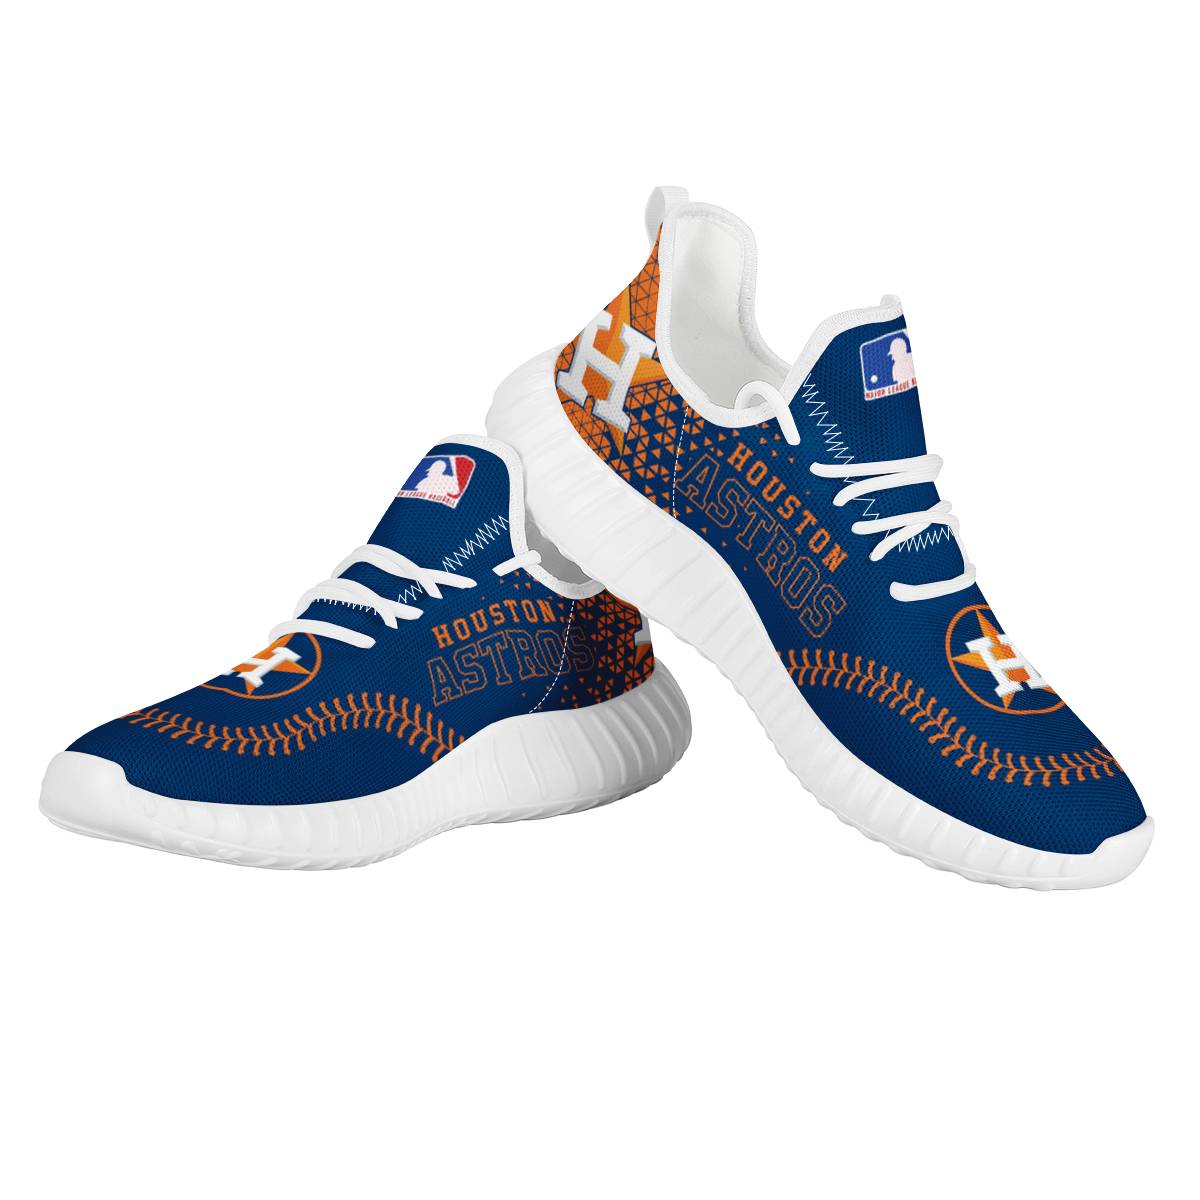 Houston Astros shoes